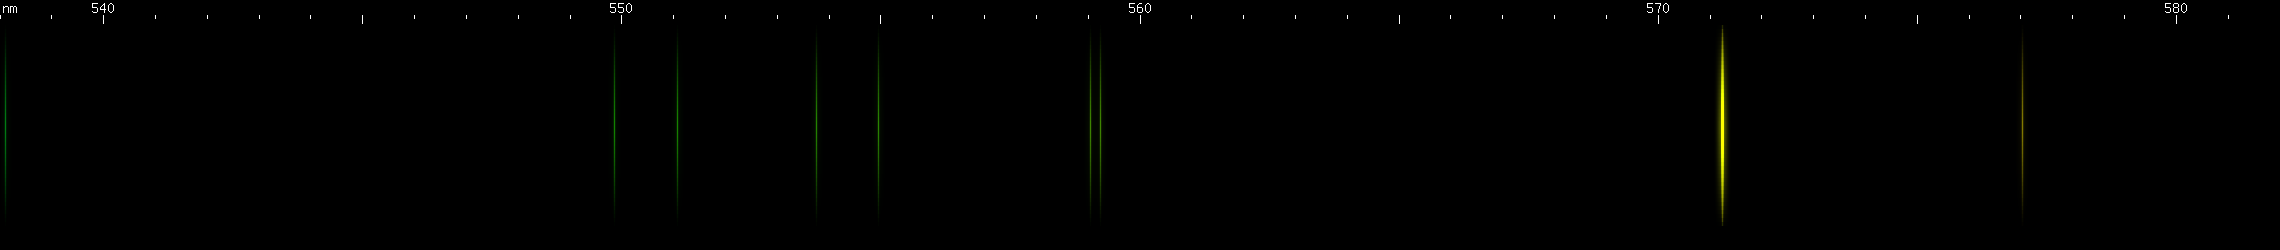 Spectral lines of Plutonium.